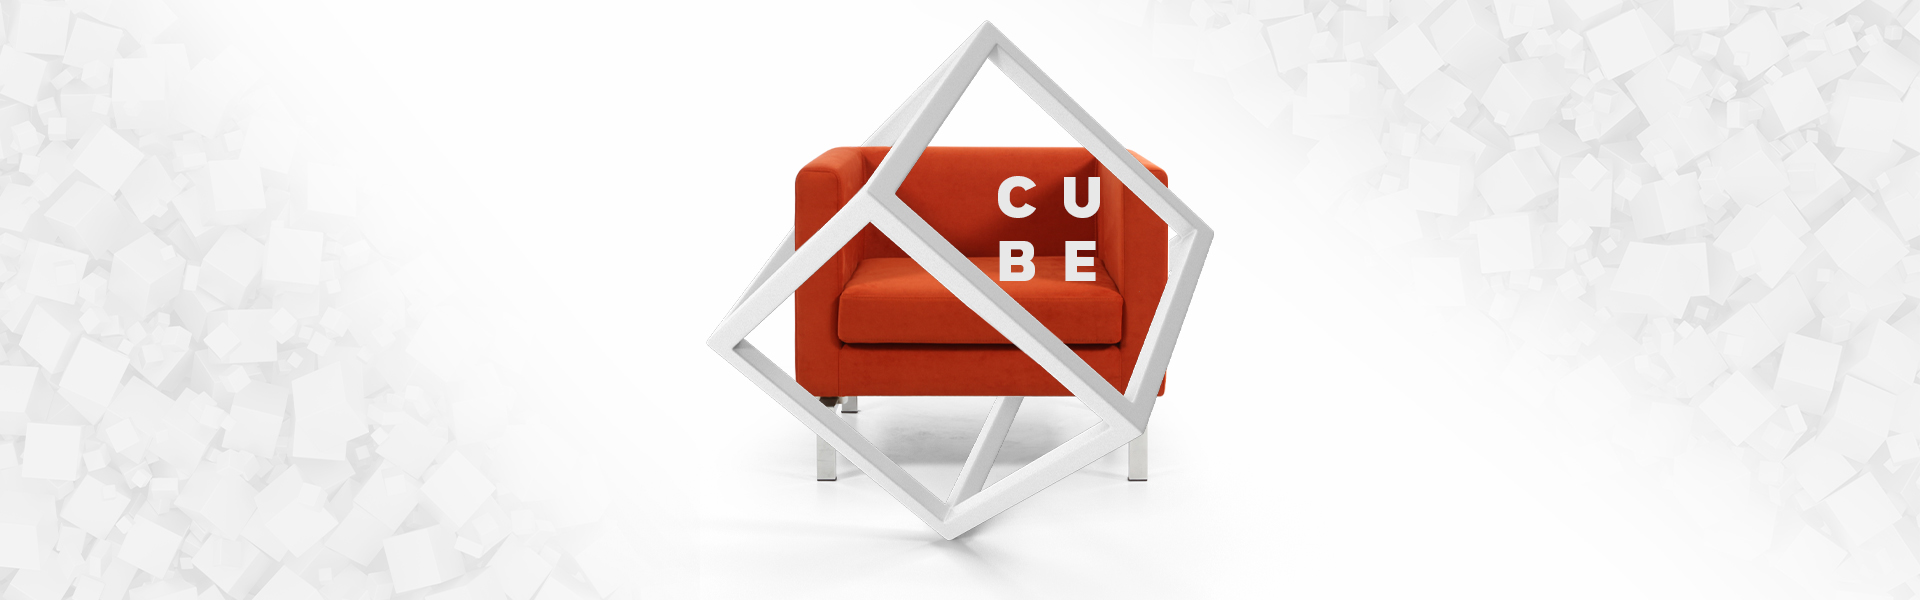 Cube-